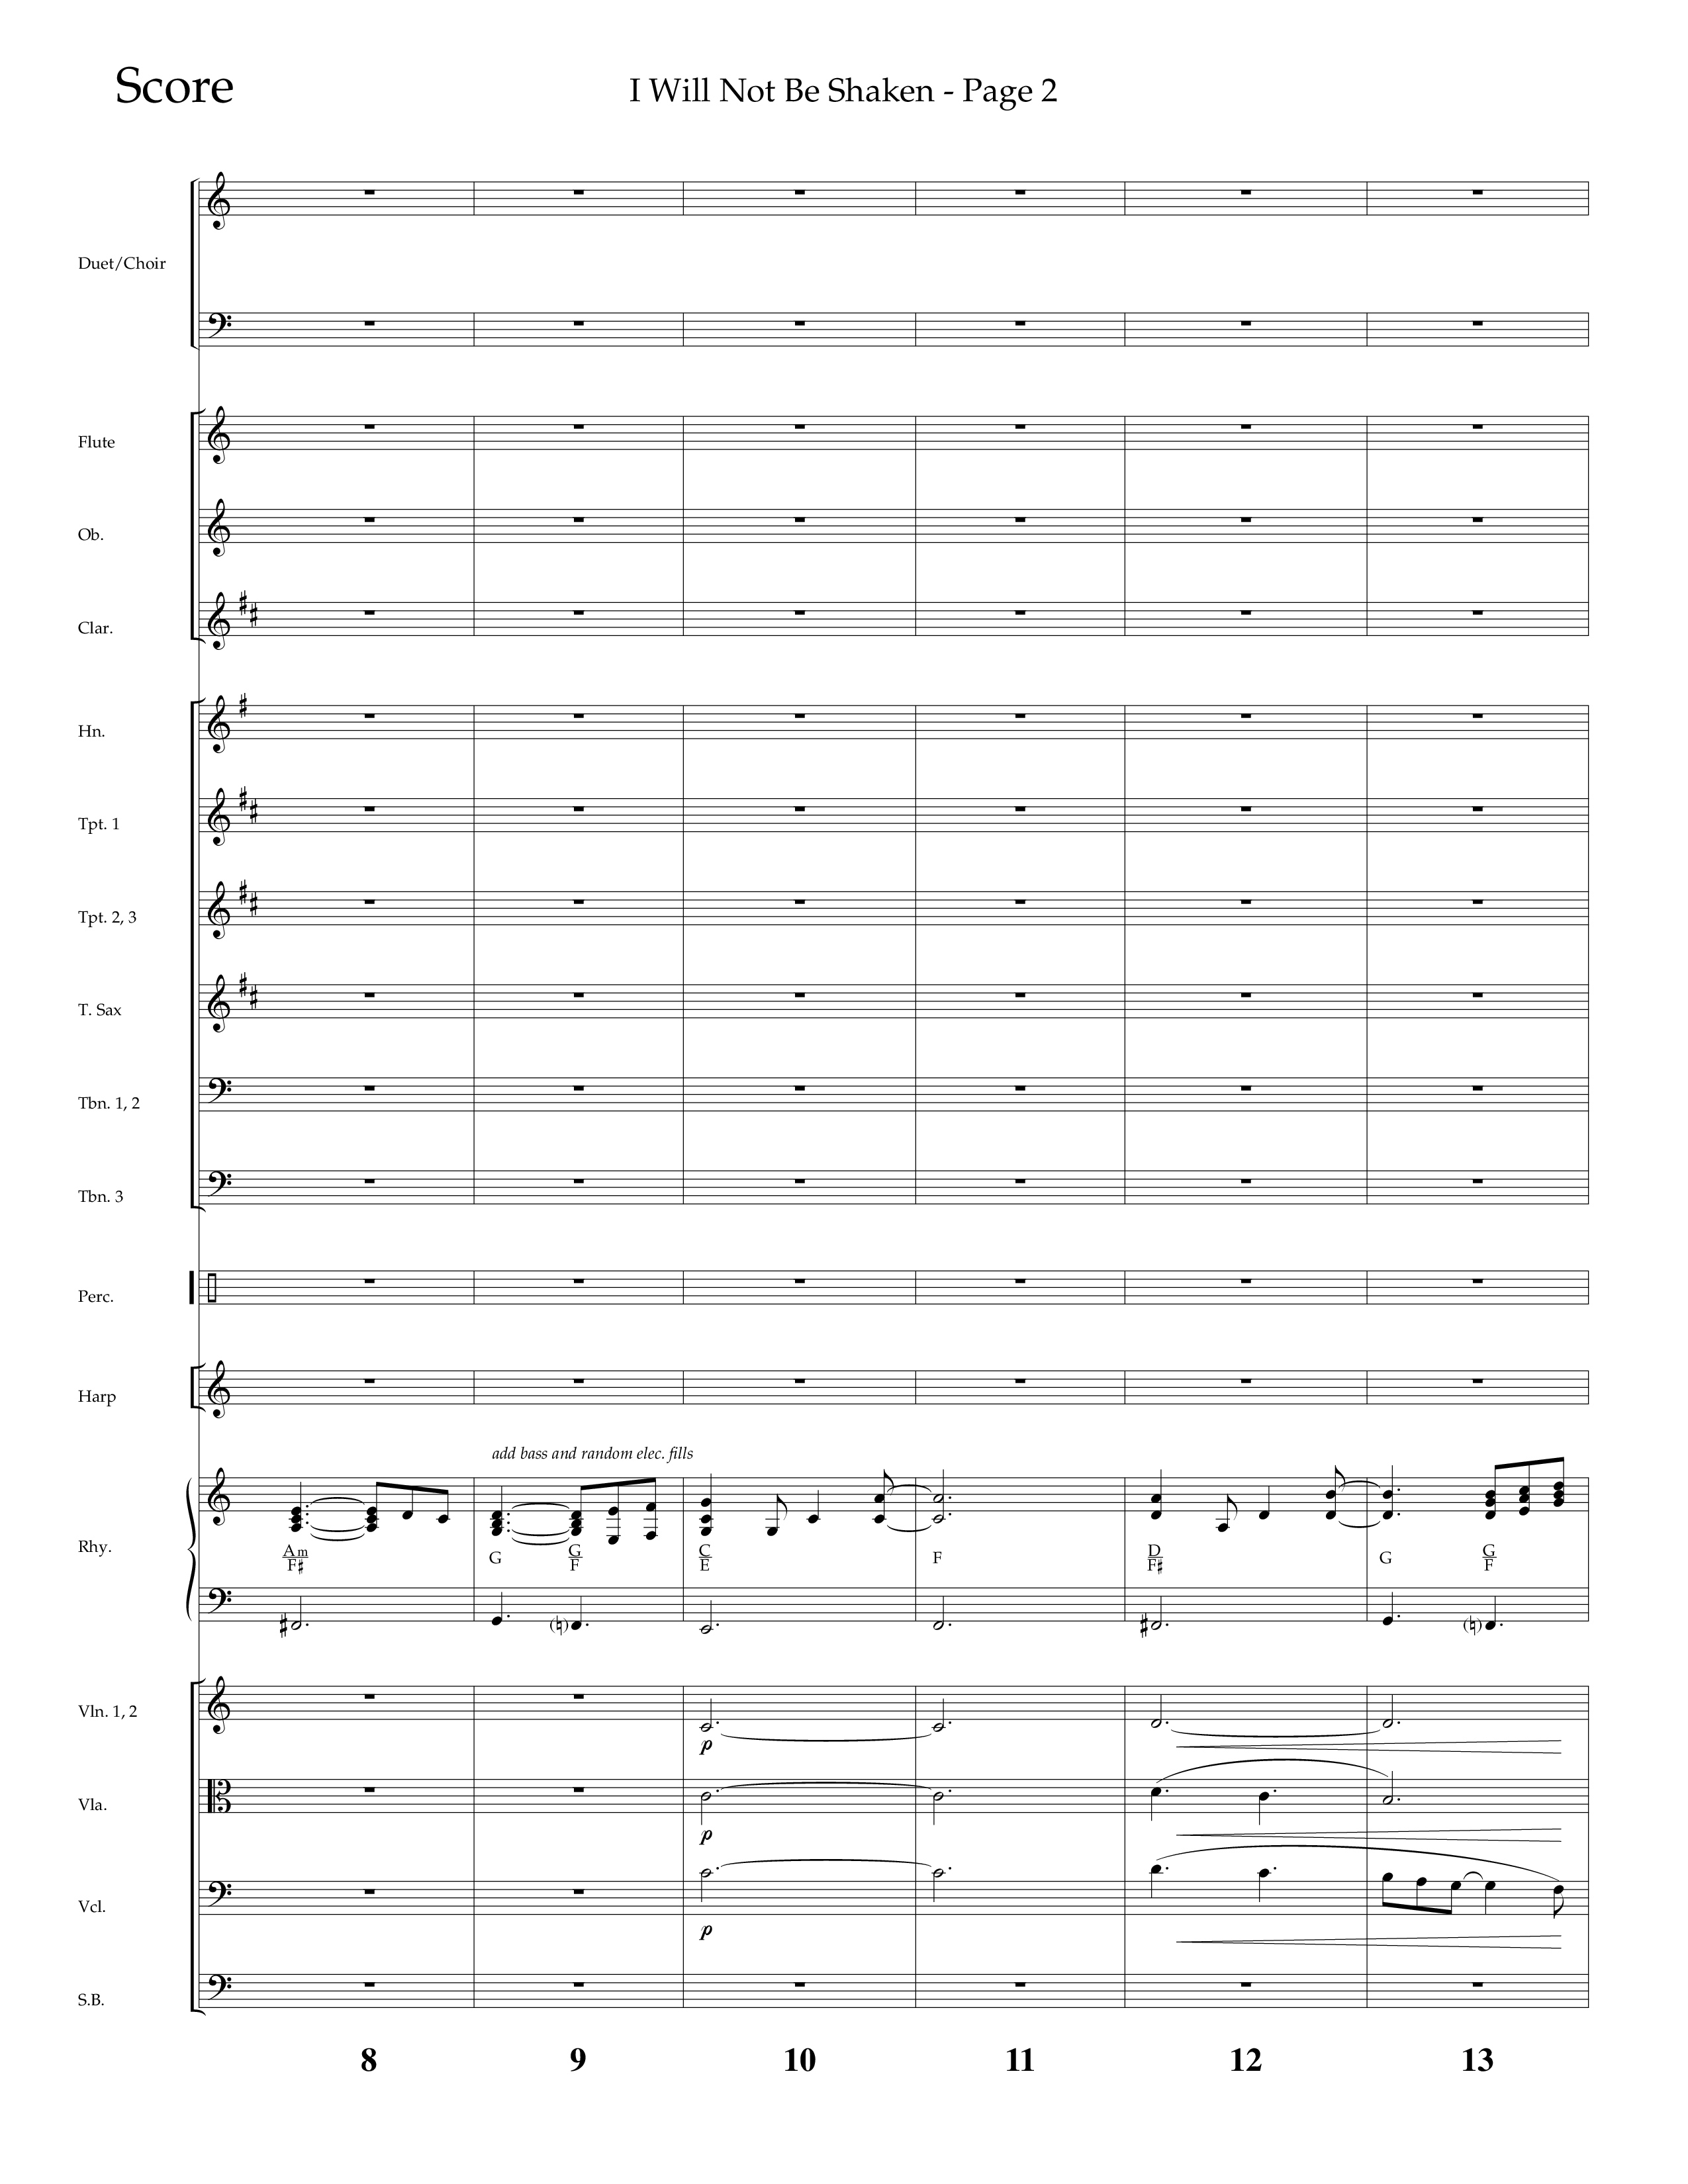 I Will Not Be Shaken (Choral Anthem SATB) Orchestration (Lifeway Choral / Arr. Cliff Duren)